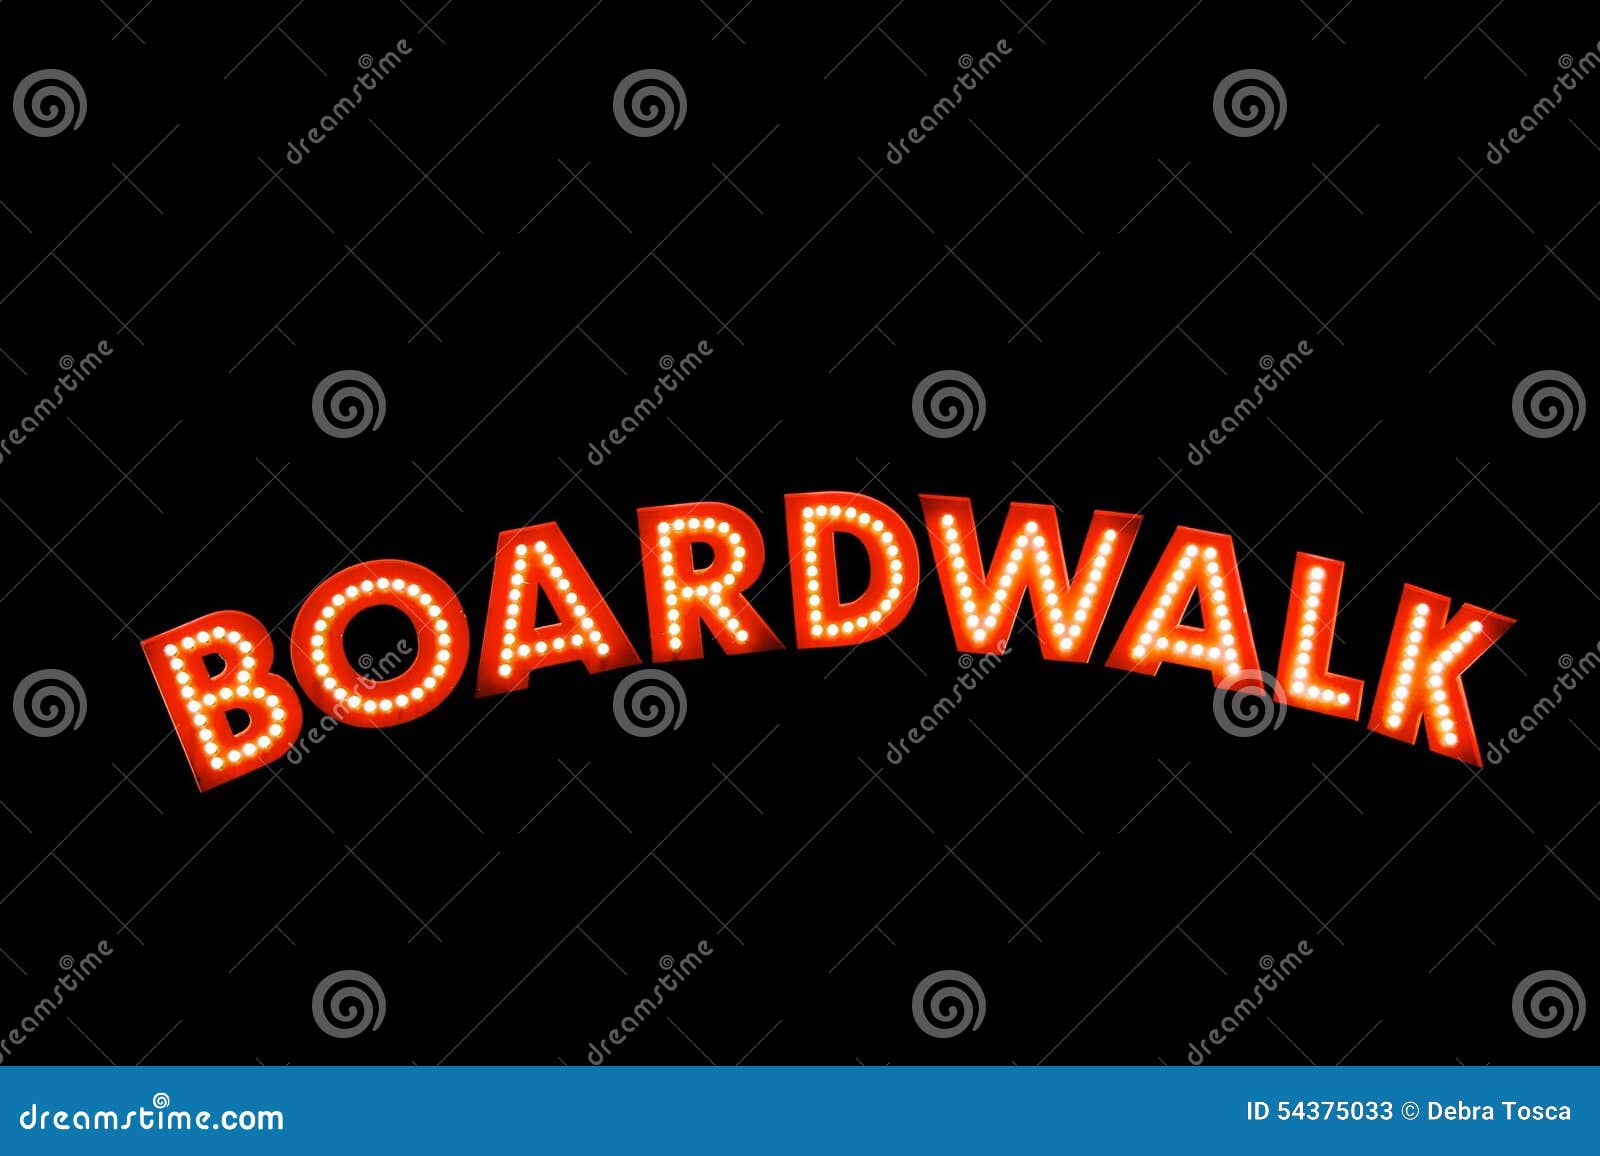 boardwalk sign